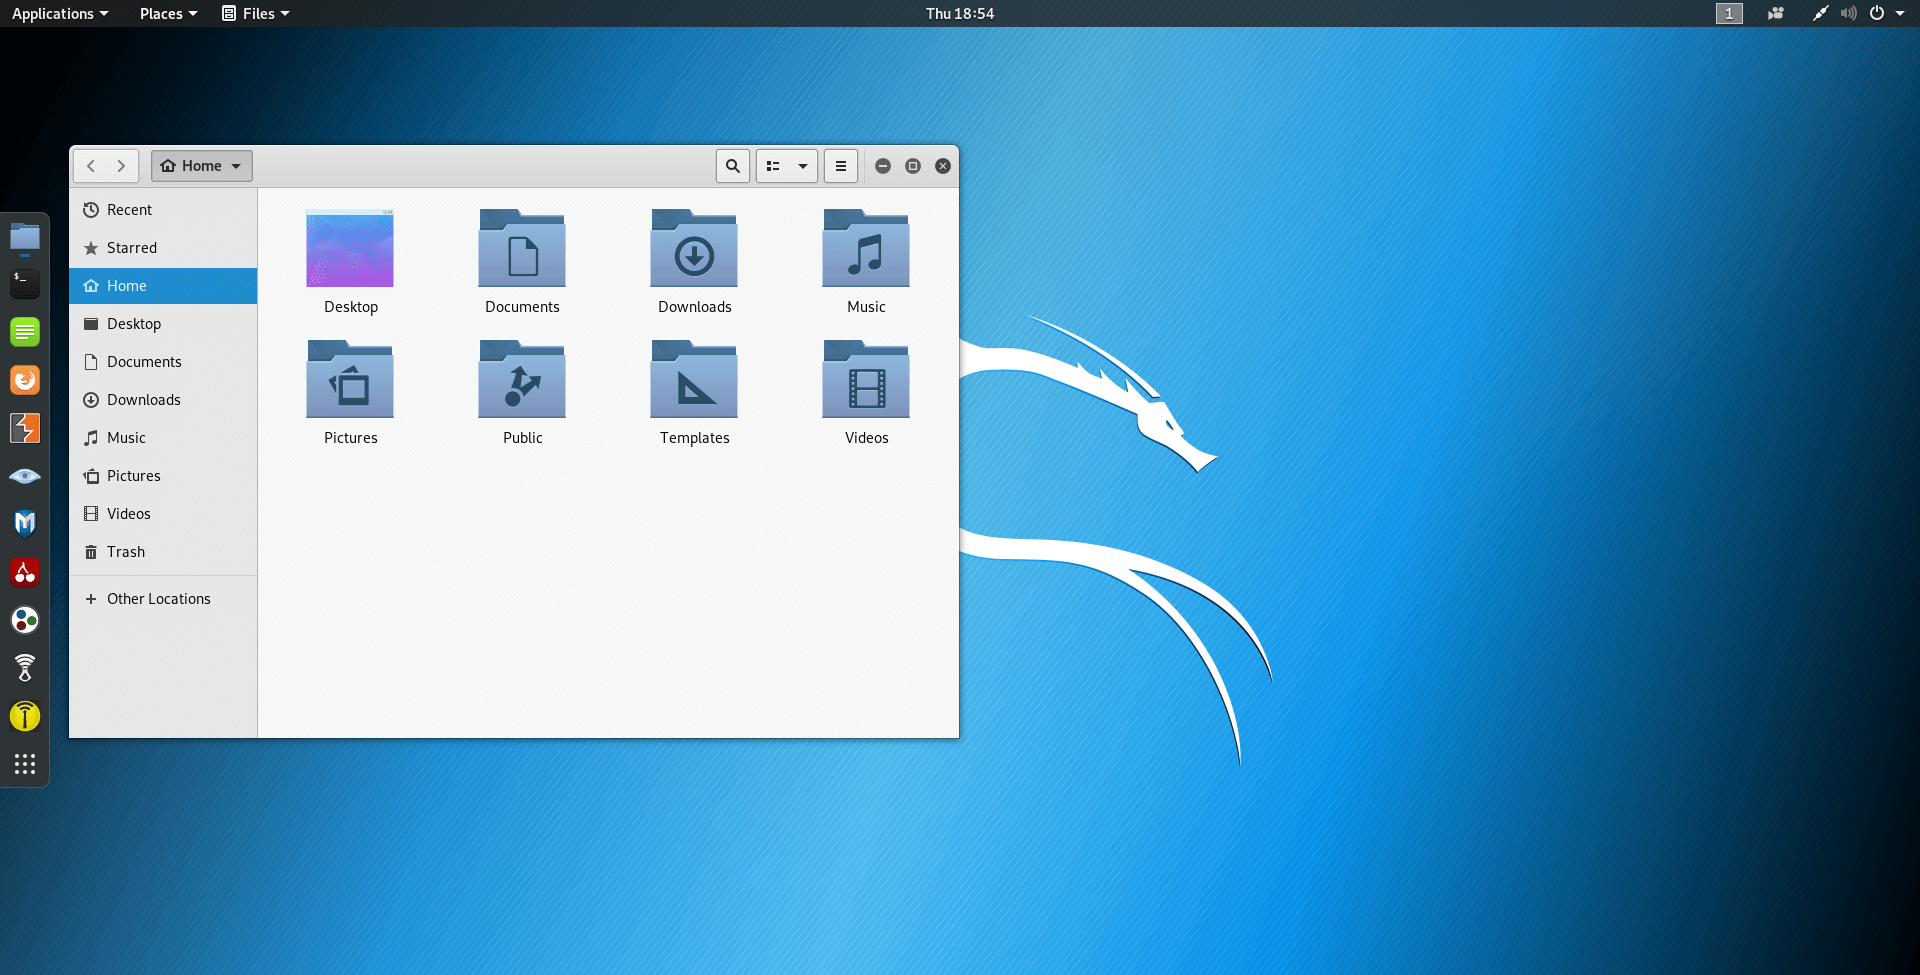 kali linux iso file free download